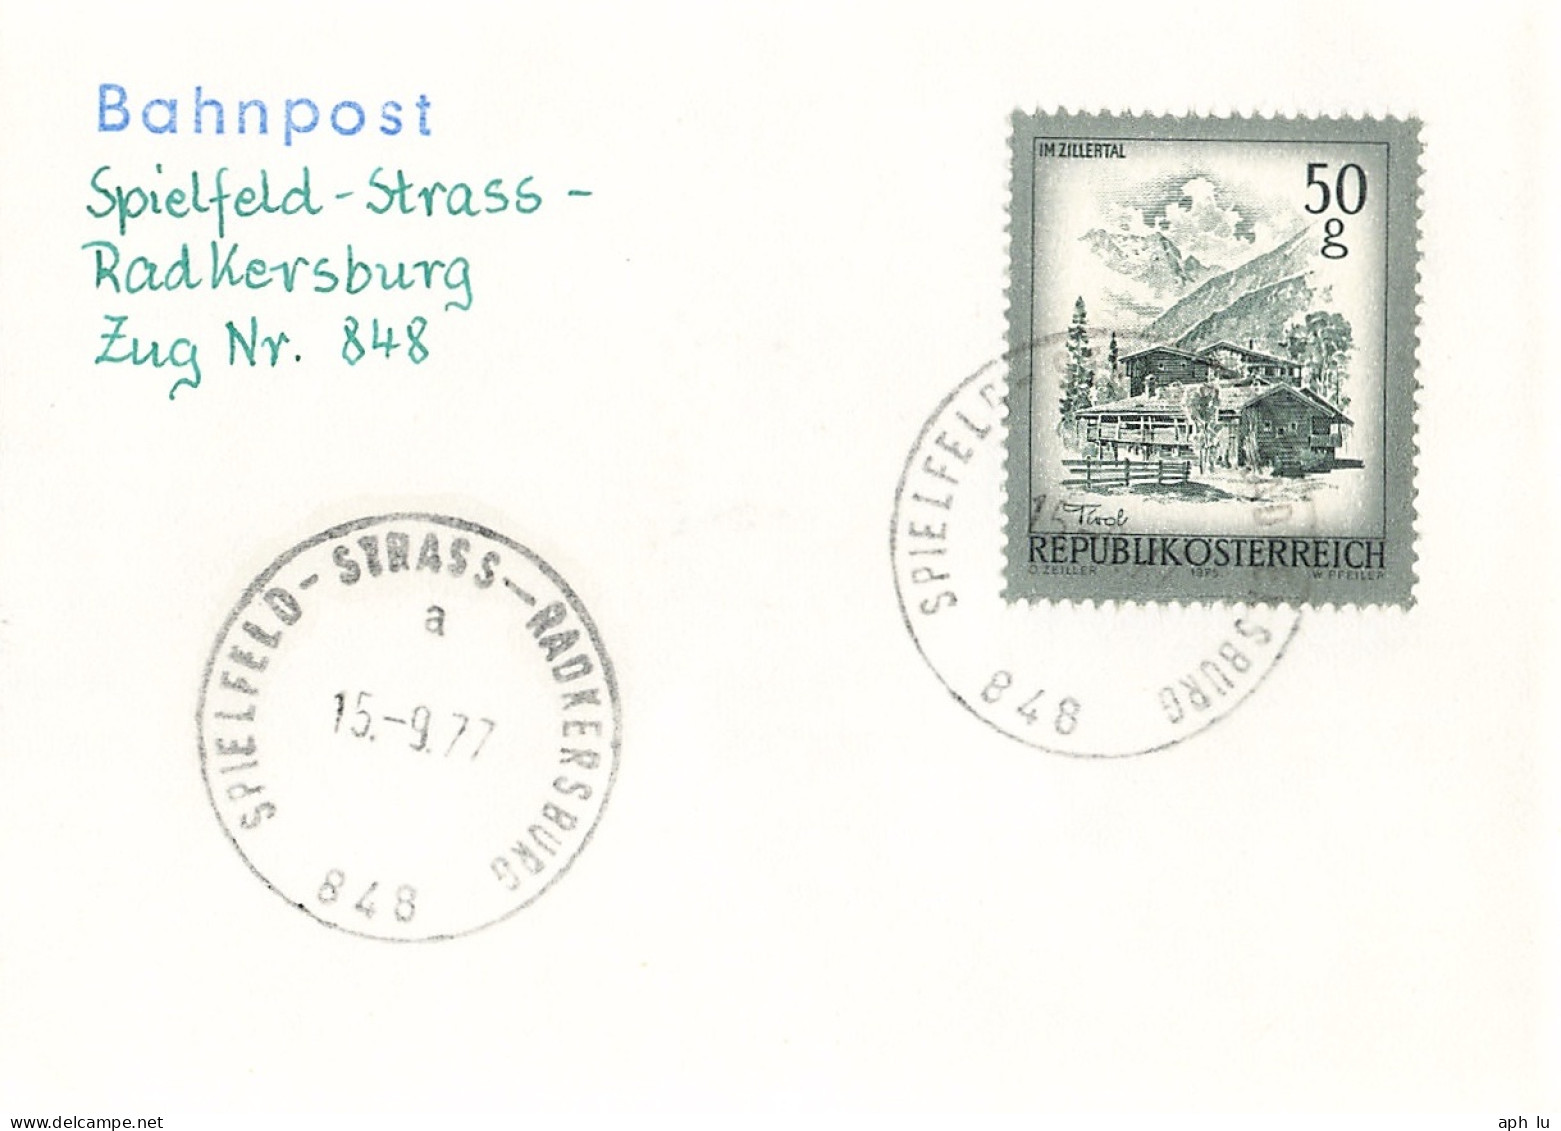 Bahnpost (R.P.O./T.P.O) Spielfeld Strass-Radkersburg [Ausschnitt] (AD3123) - Covers & Documents